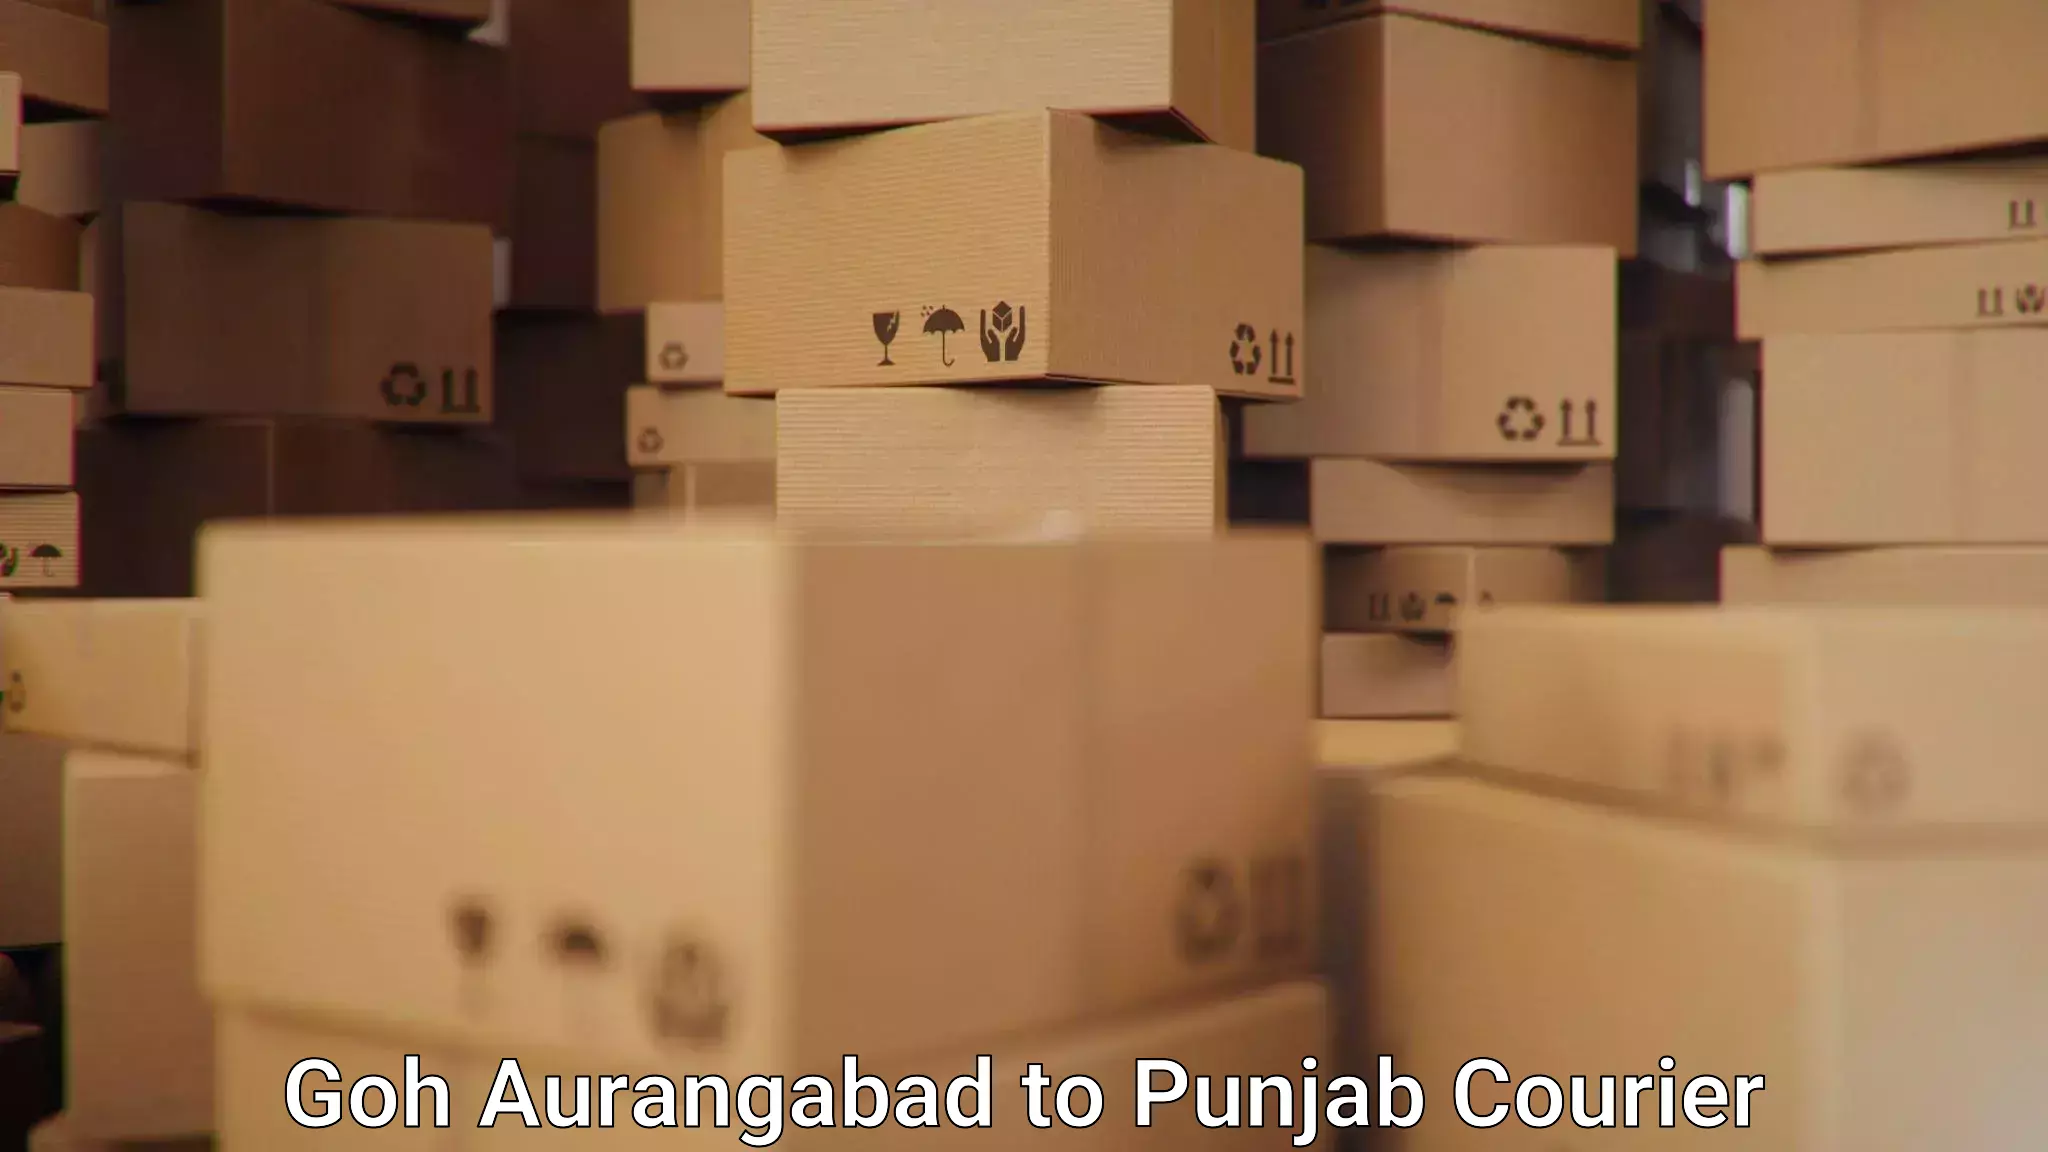 Same-day delivery options Goh Aurangabad to Amritsar